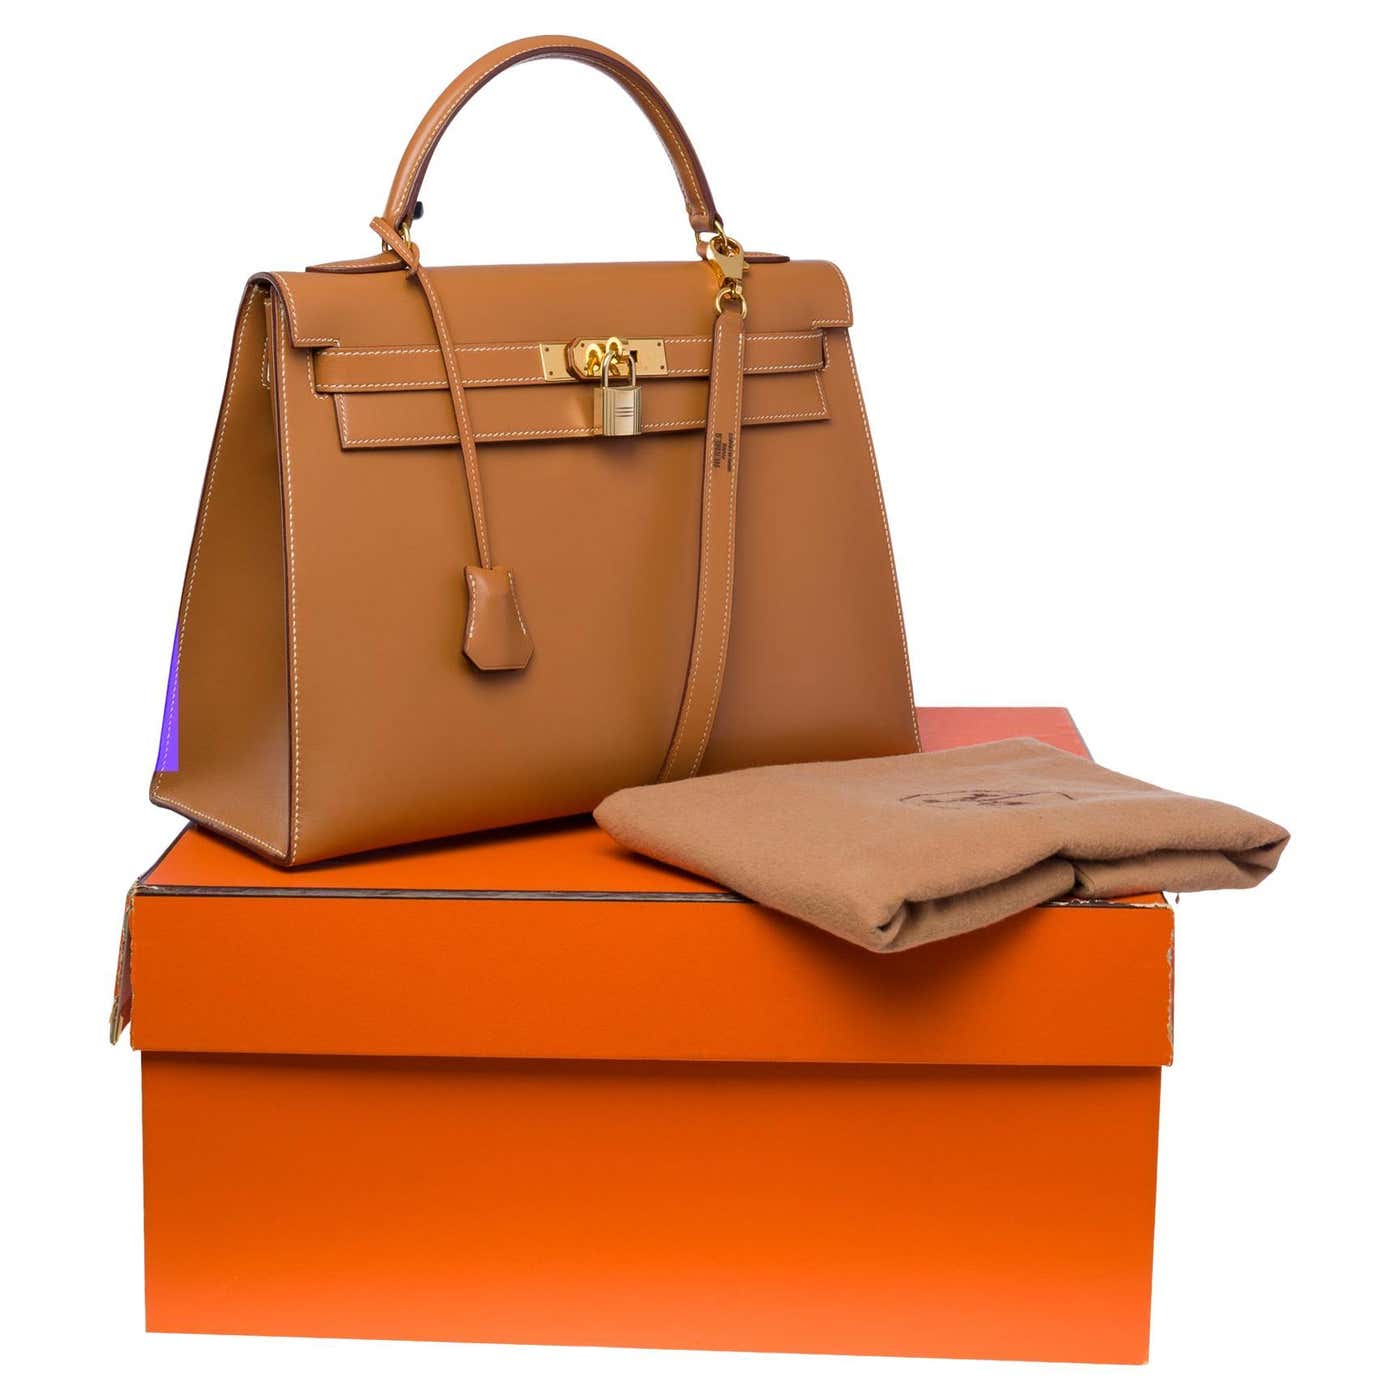 Very Rare Hermès Kelly 32 sellier handbag strap in Gold Chamonix